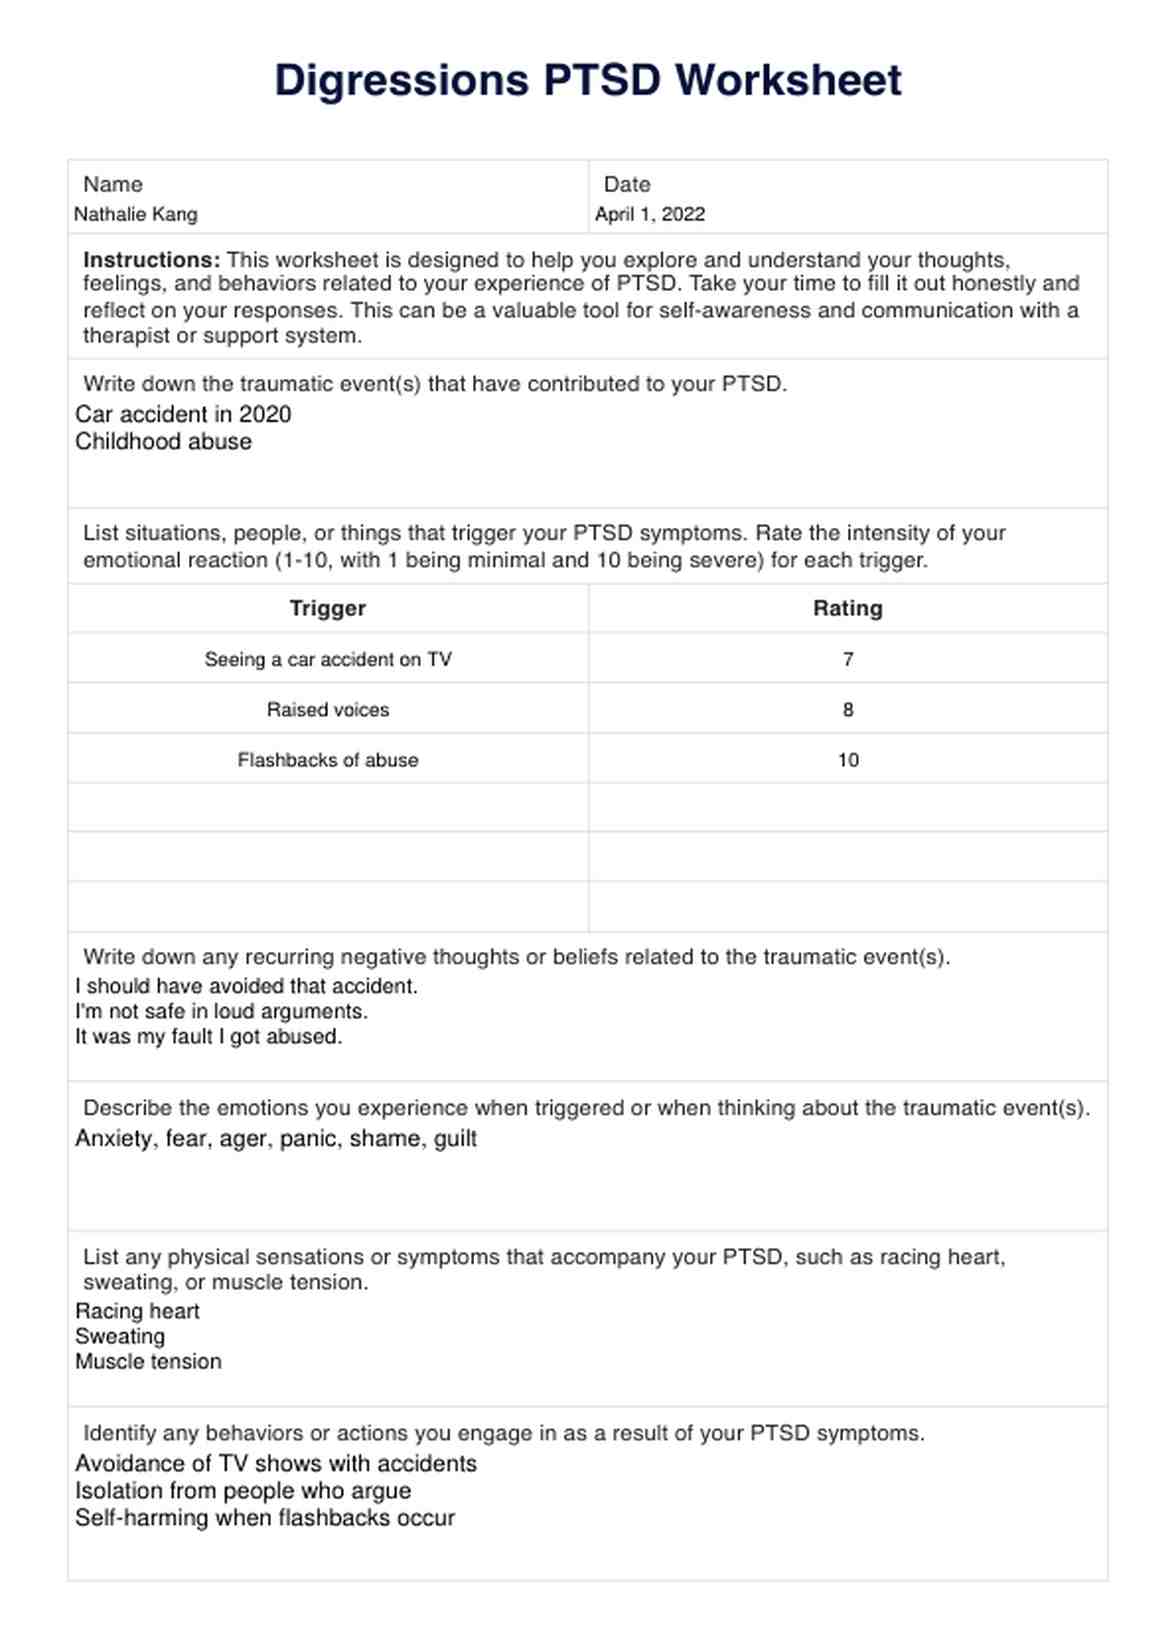 Digressions PTSD Worksheets PDF Example